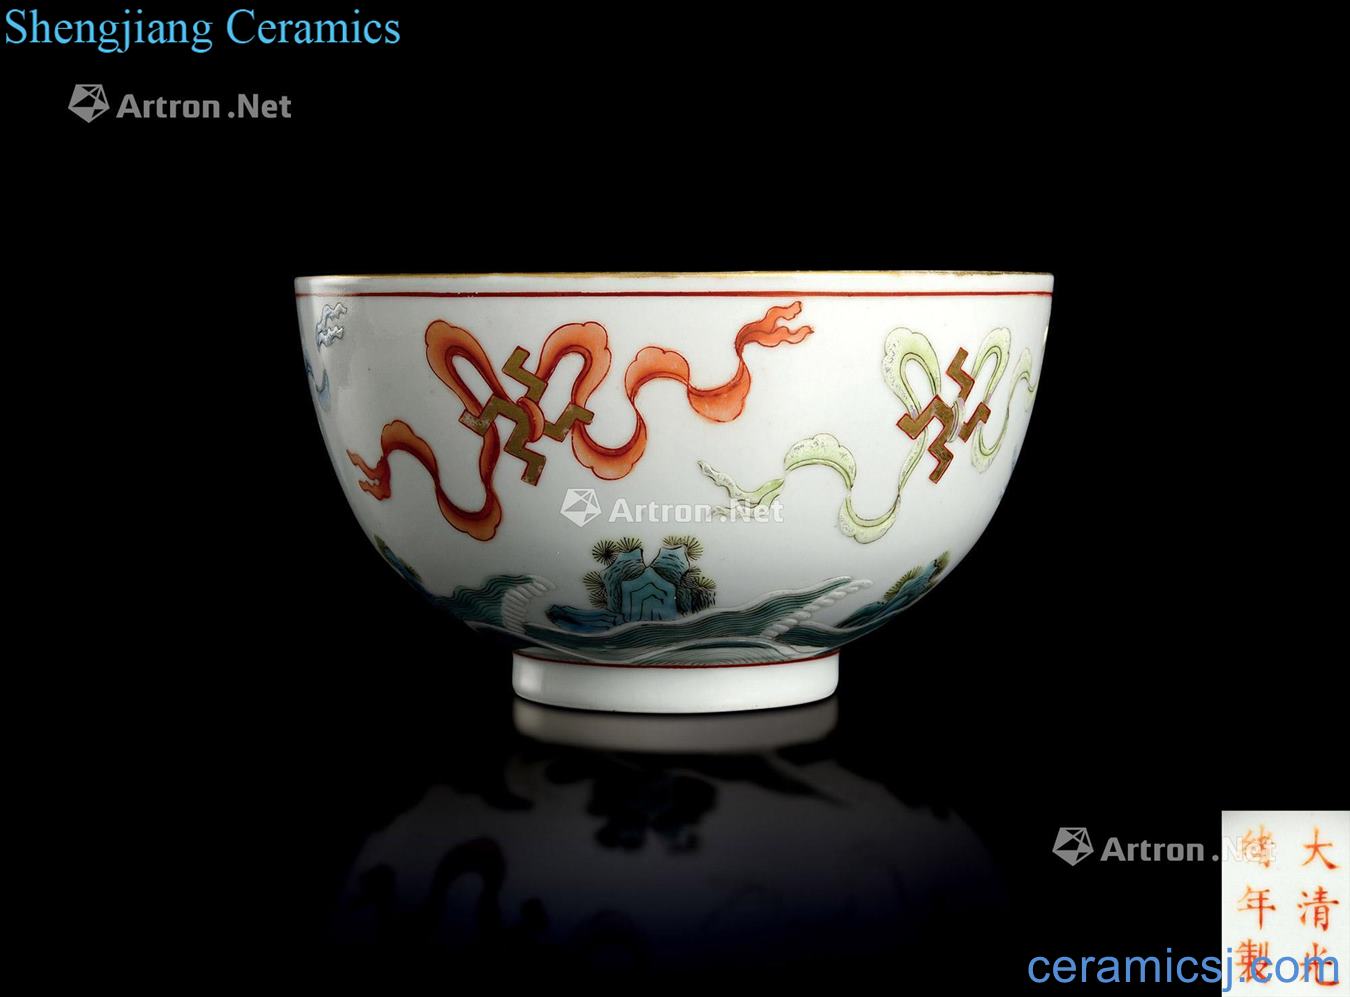 China, the qing dynasty emperor guangxu Kiln in turquoise outside powder enamel glaze in a bowl